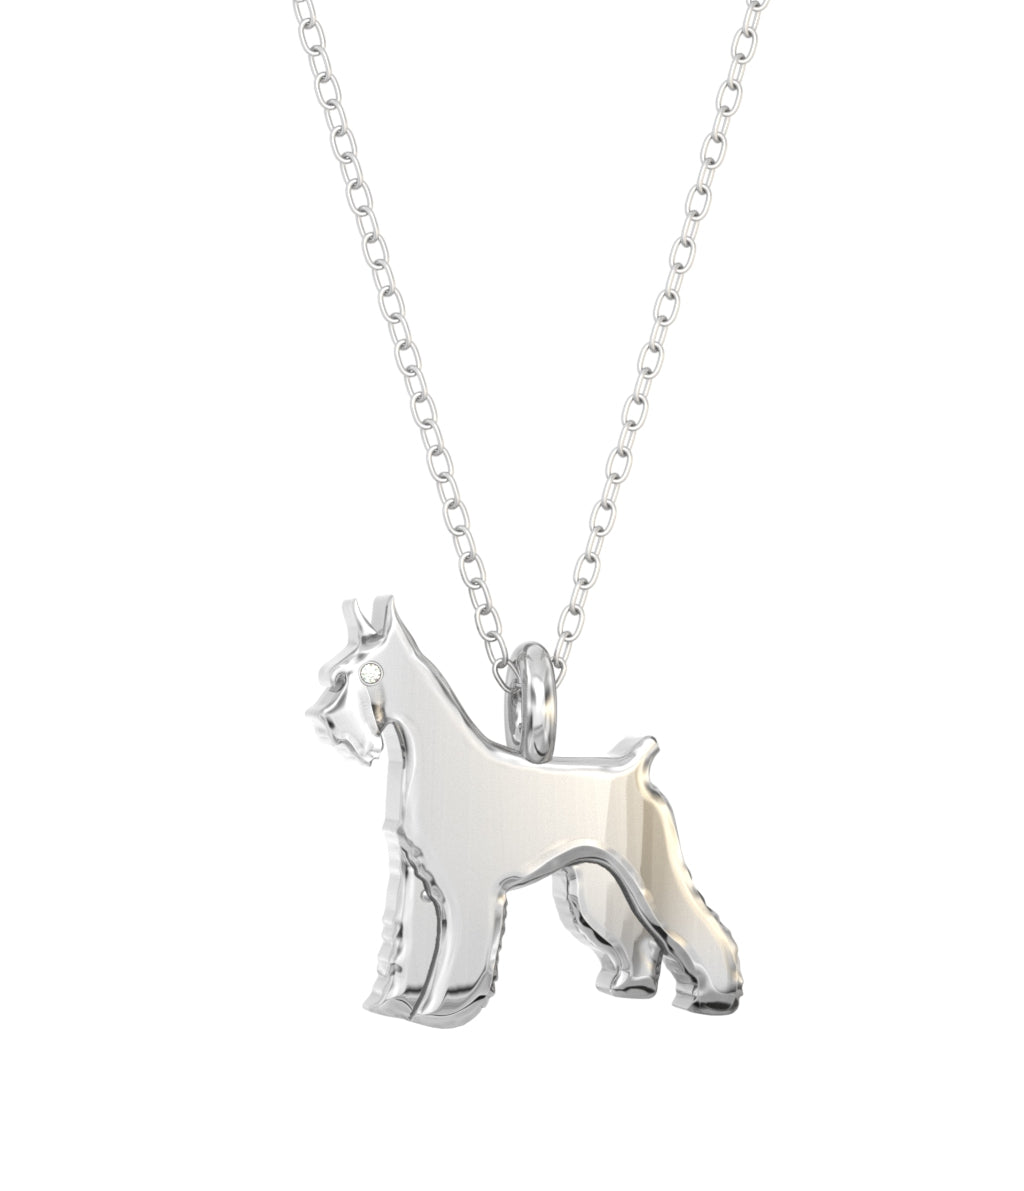 Giant Schnauzer Mini Pups Diamond Necklace sterling silver